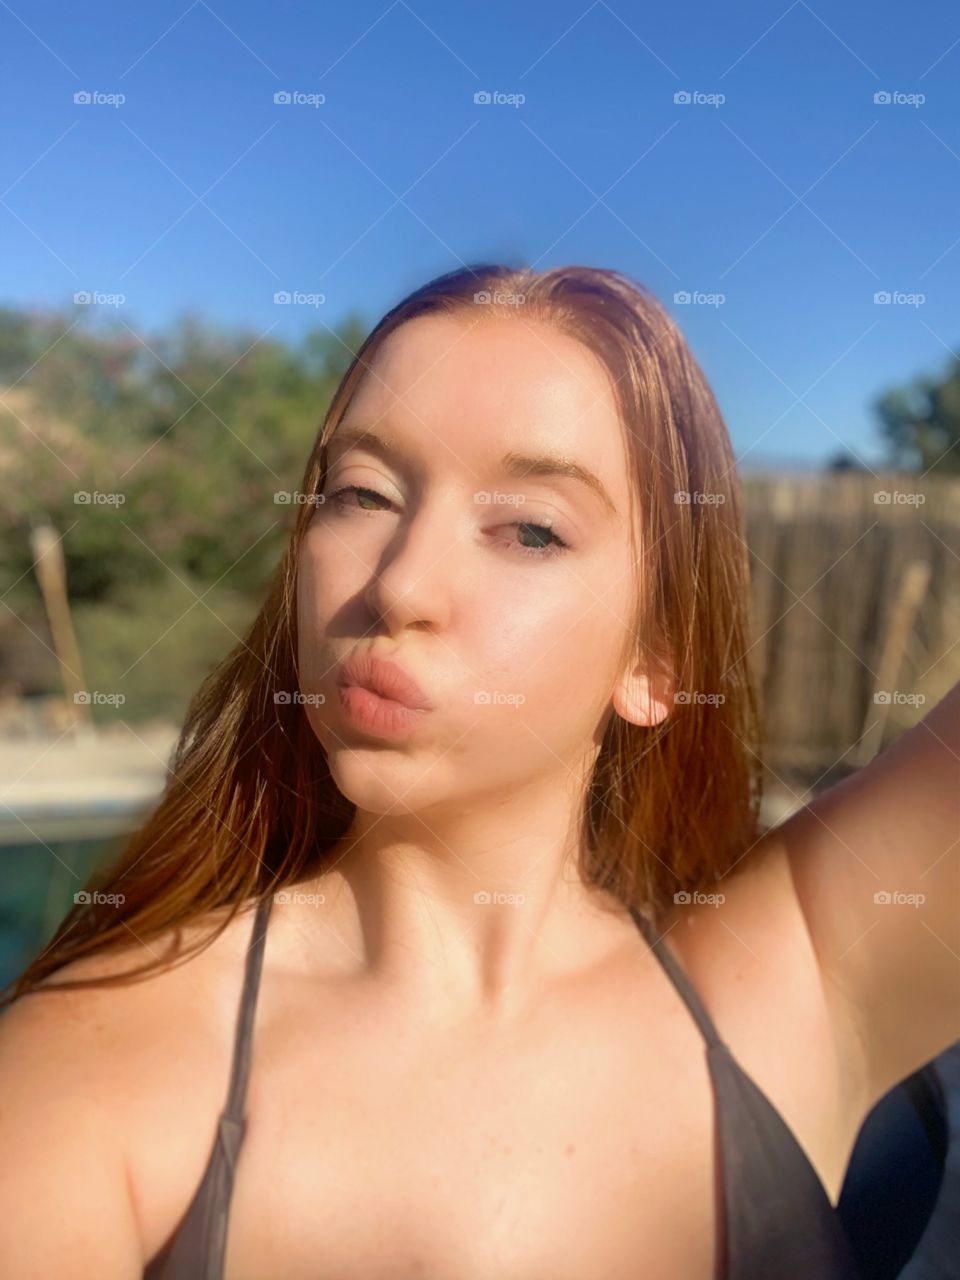 Cute photograph of a young redheaded model posing in a bikini